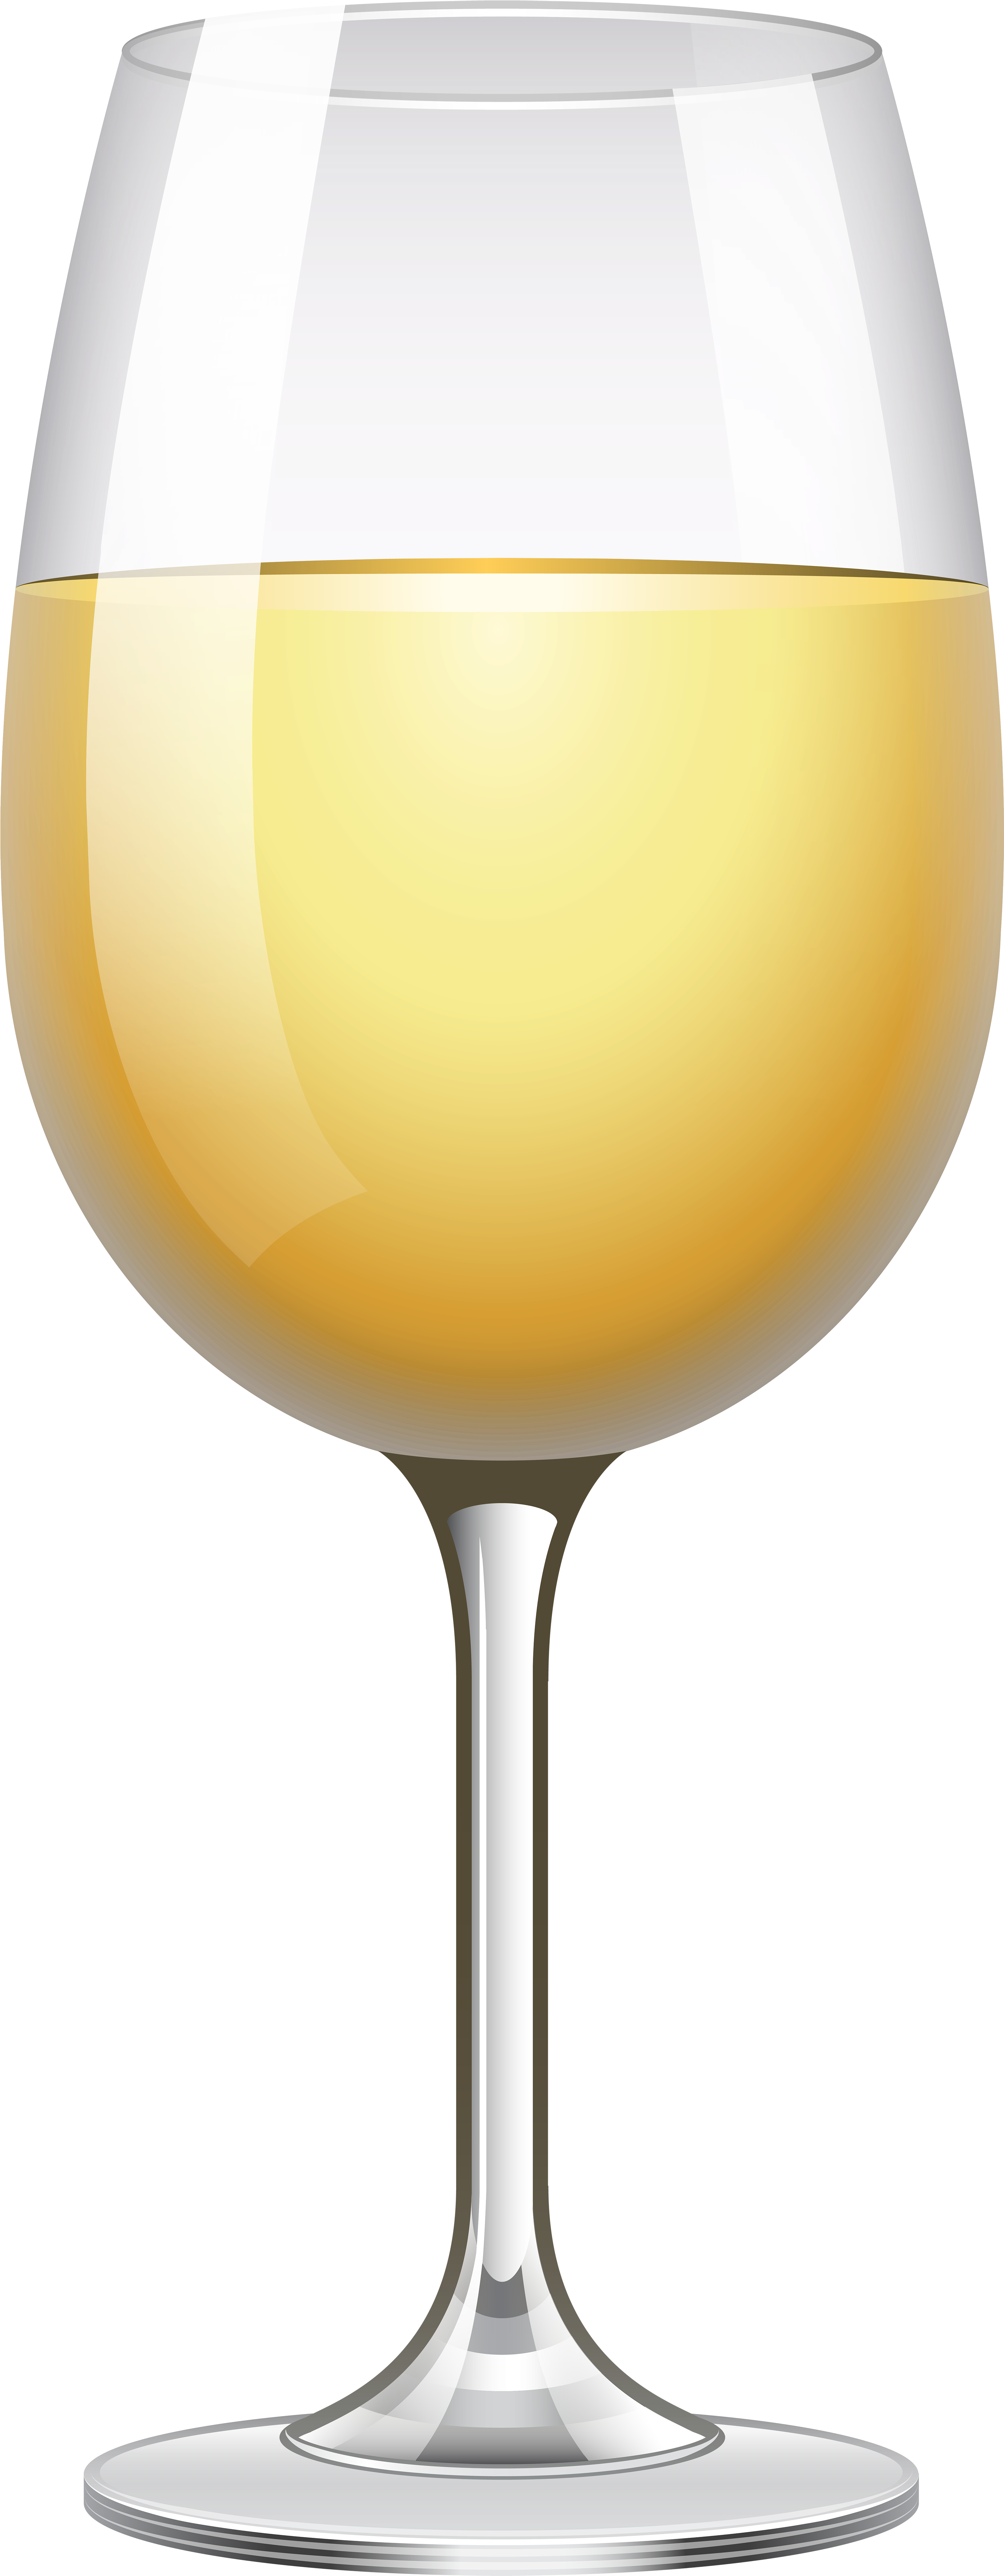 White Wine Glass Transparent Png Clip Art Image